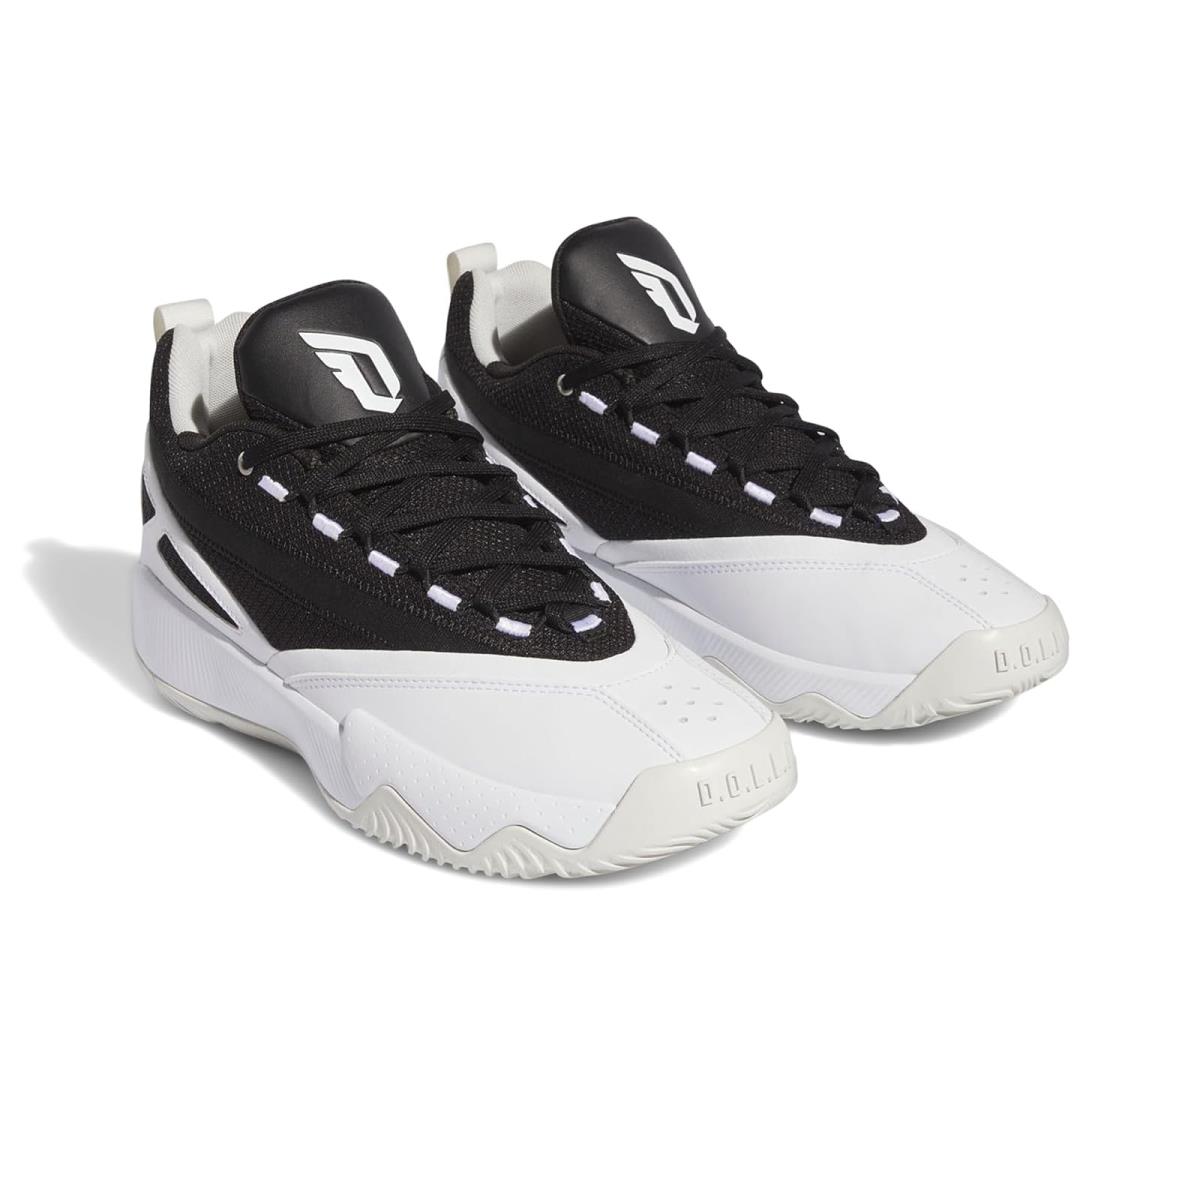 Unisex Sneakers Athletic Shoes Adidas Dame Certified 2 White/Black/Orbit Grey